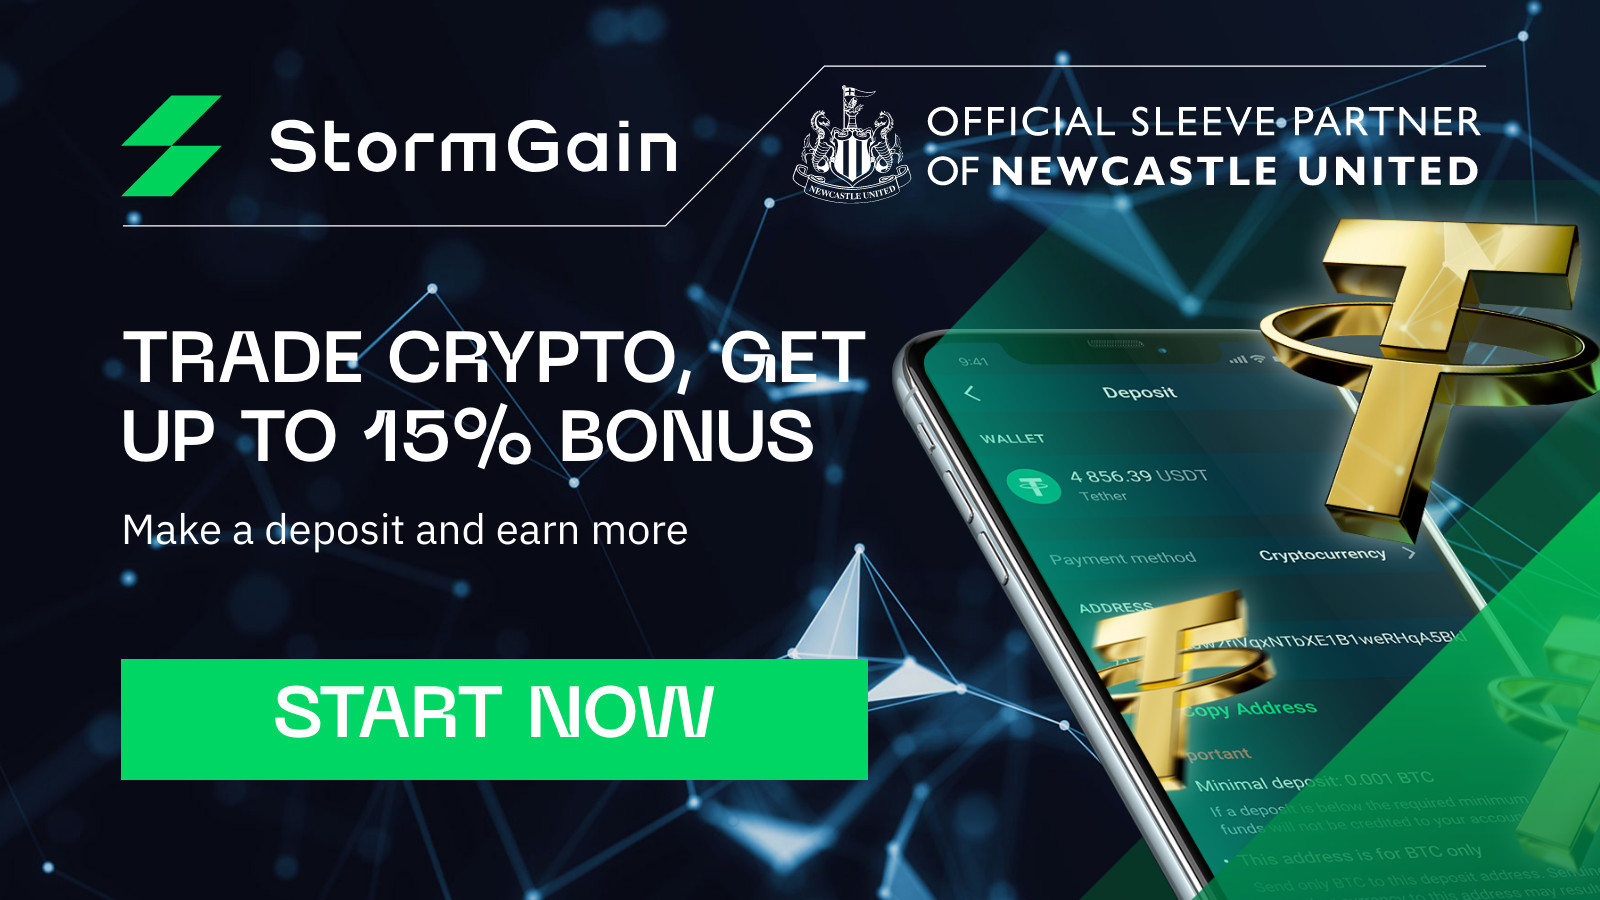 Receive Up to 15% Bonus – StormGain